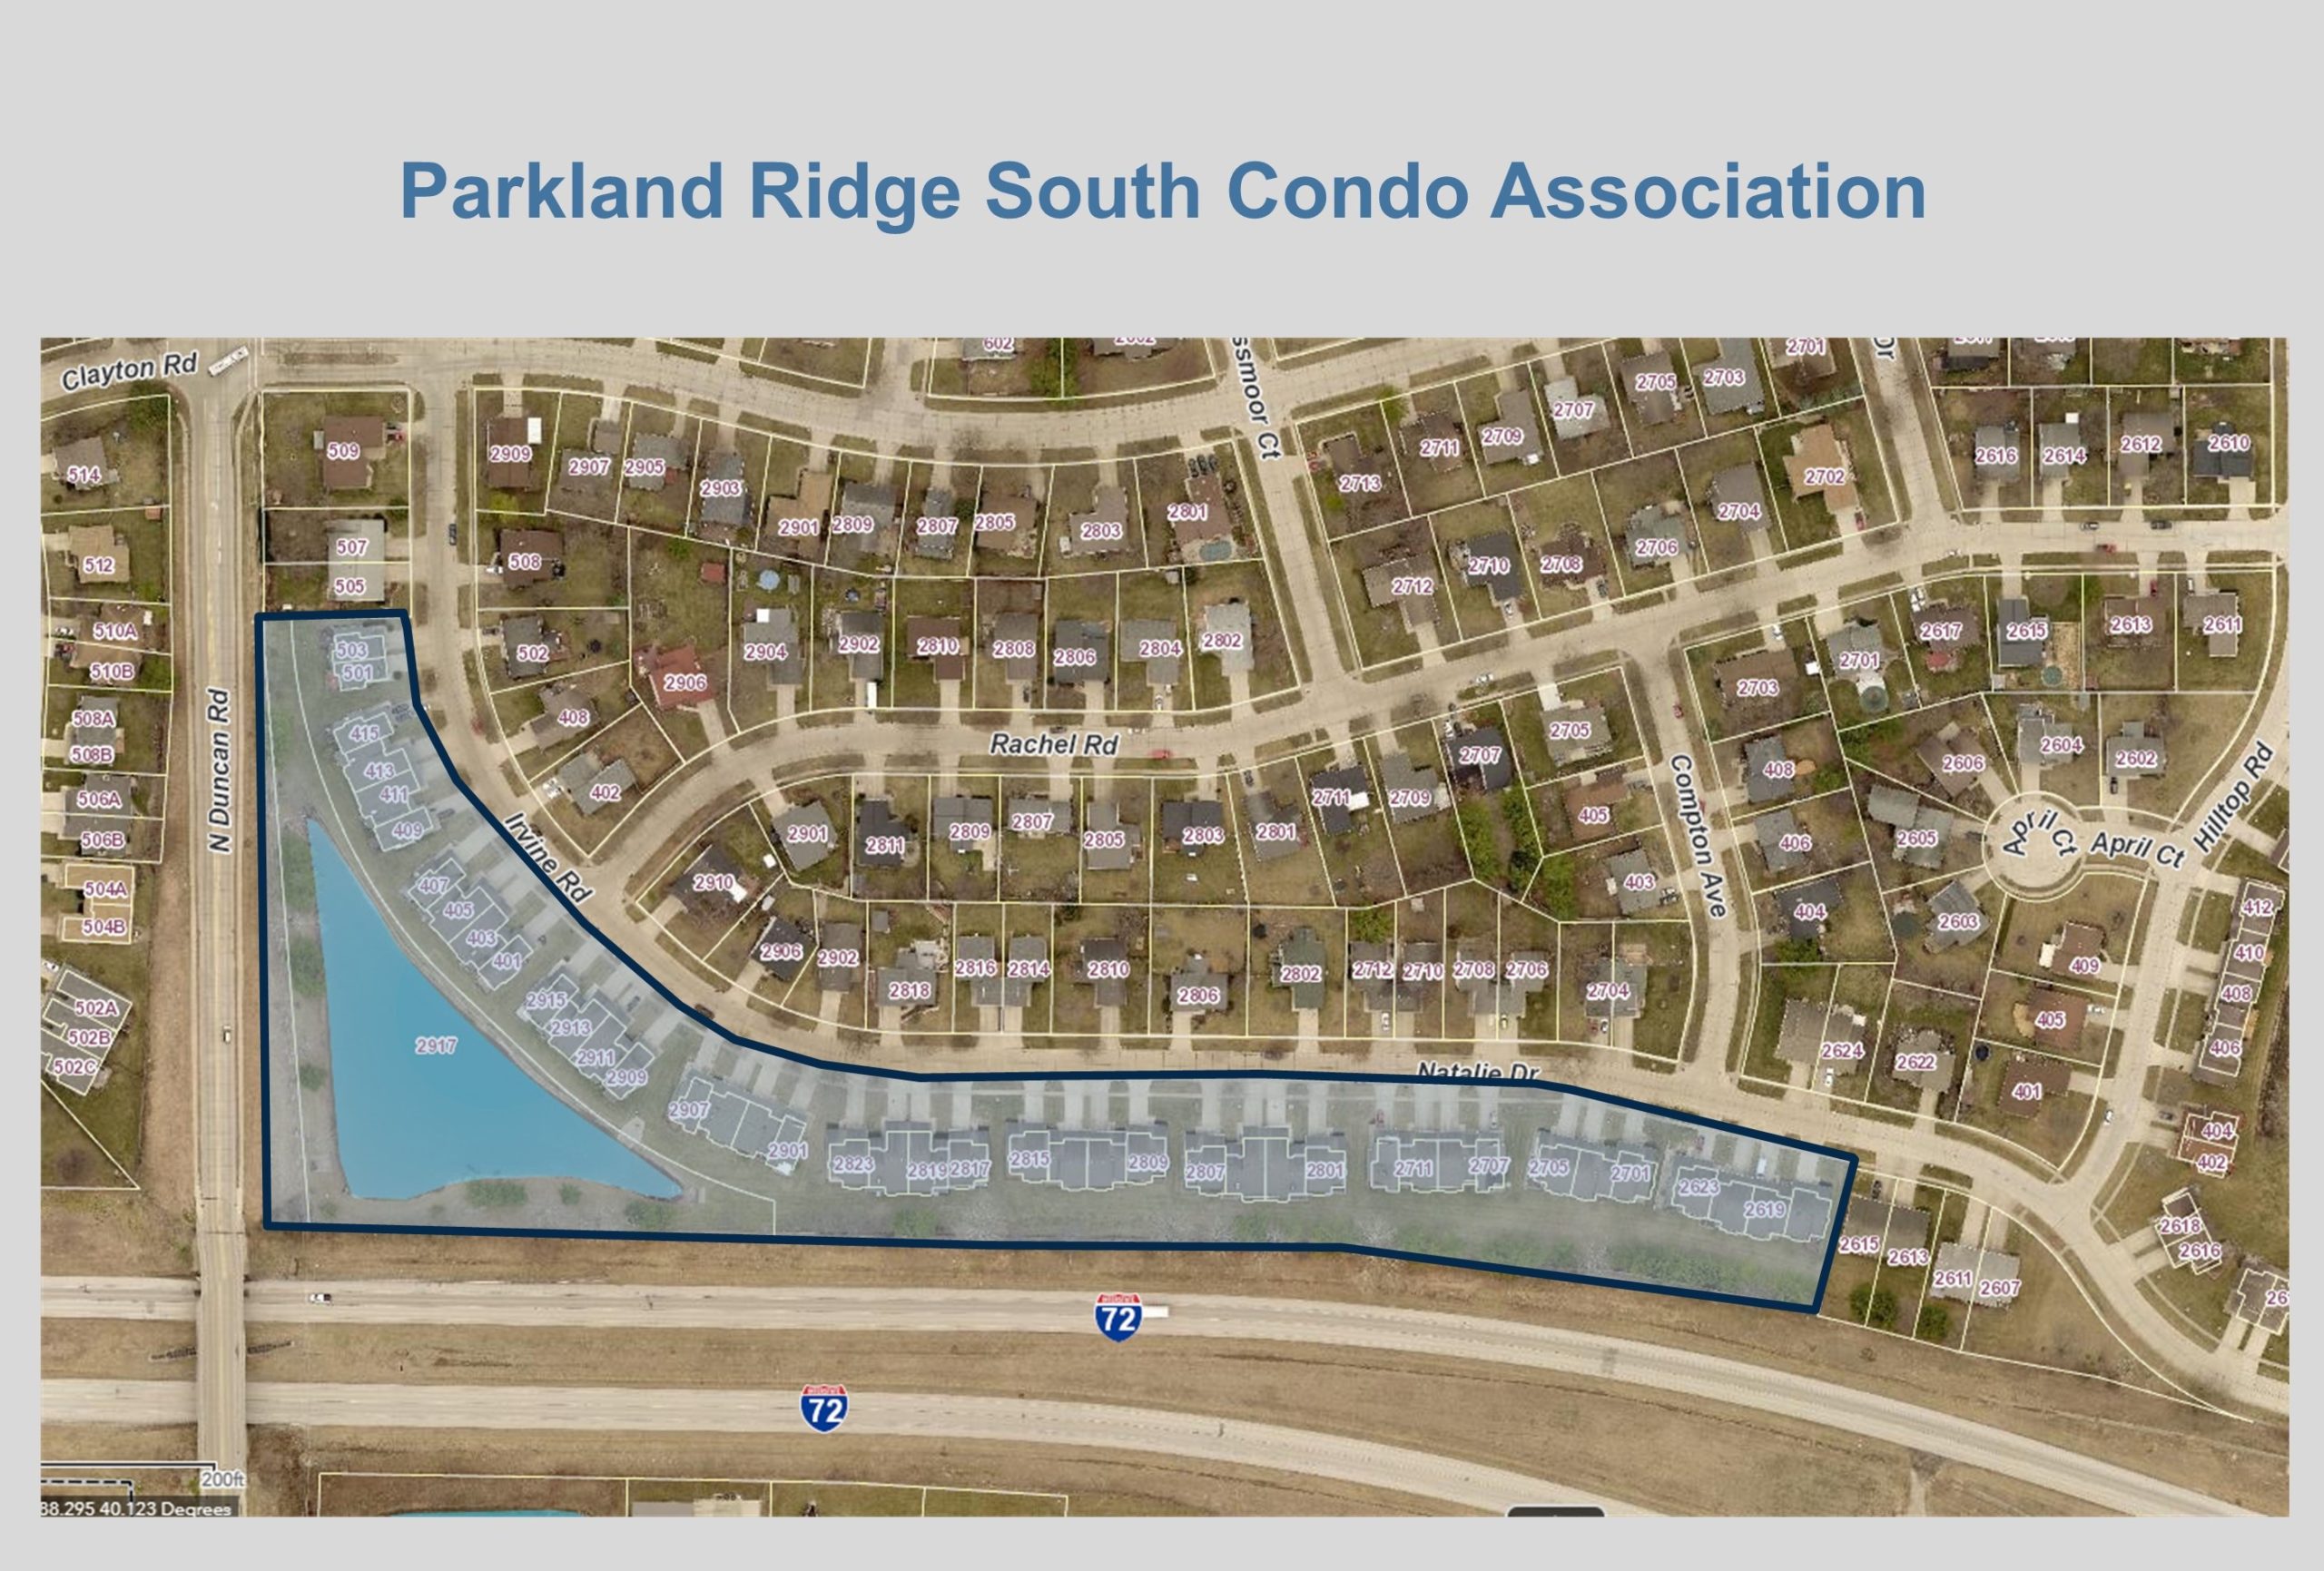 Parkland Ridge South Condo Association Group Boundaries